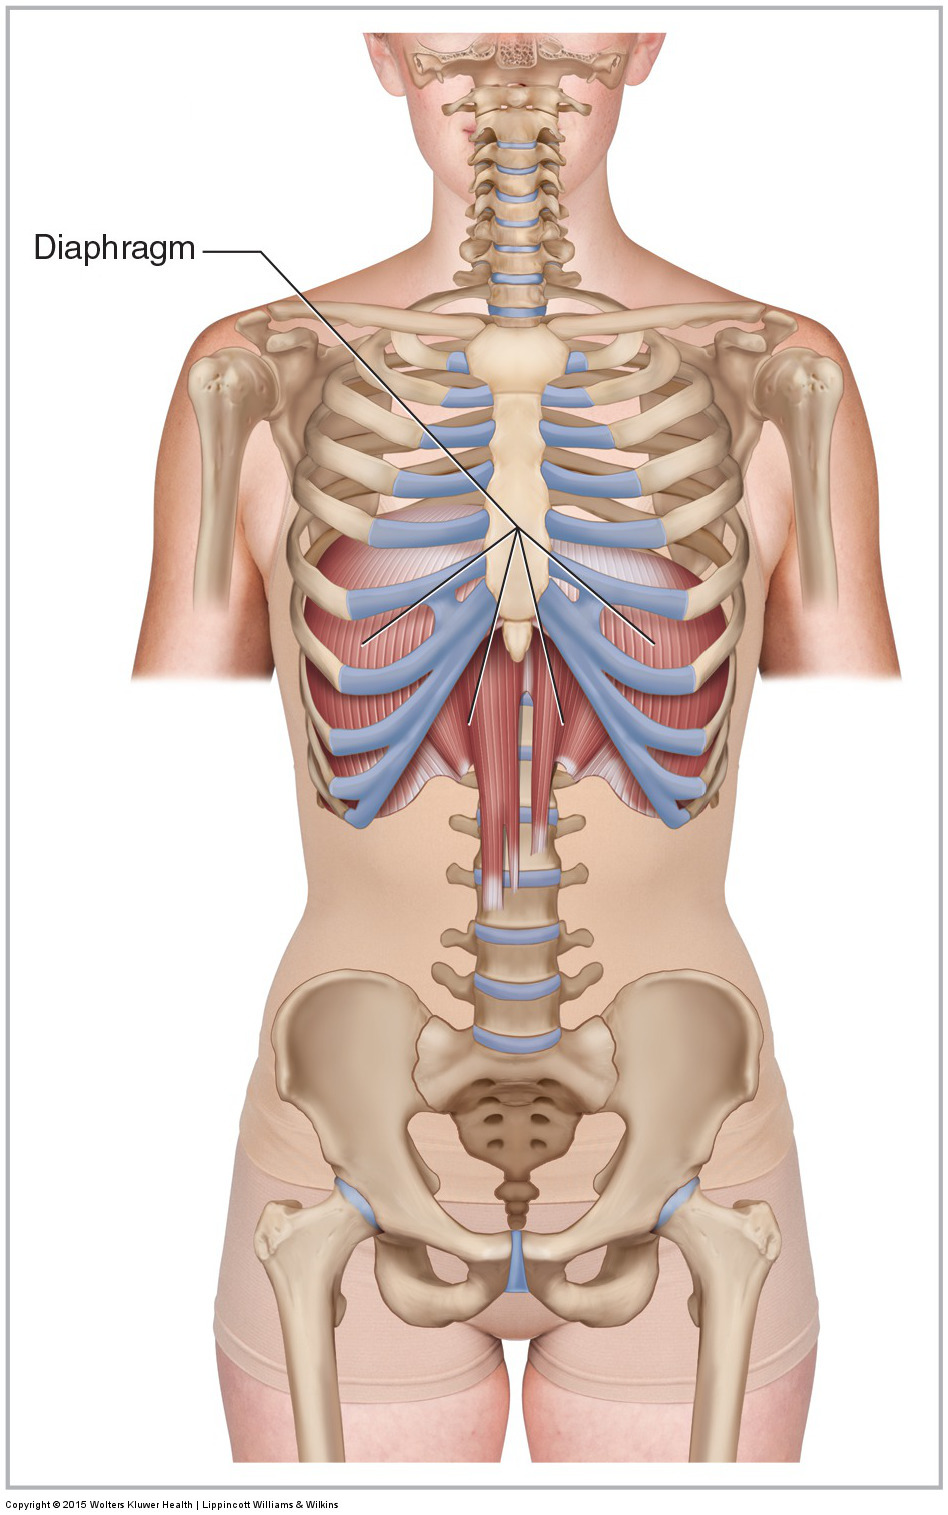 Anterior view of the diaphragm